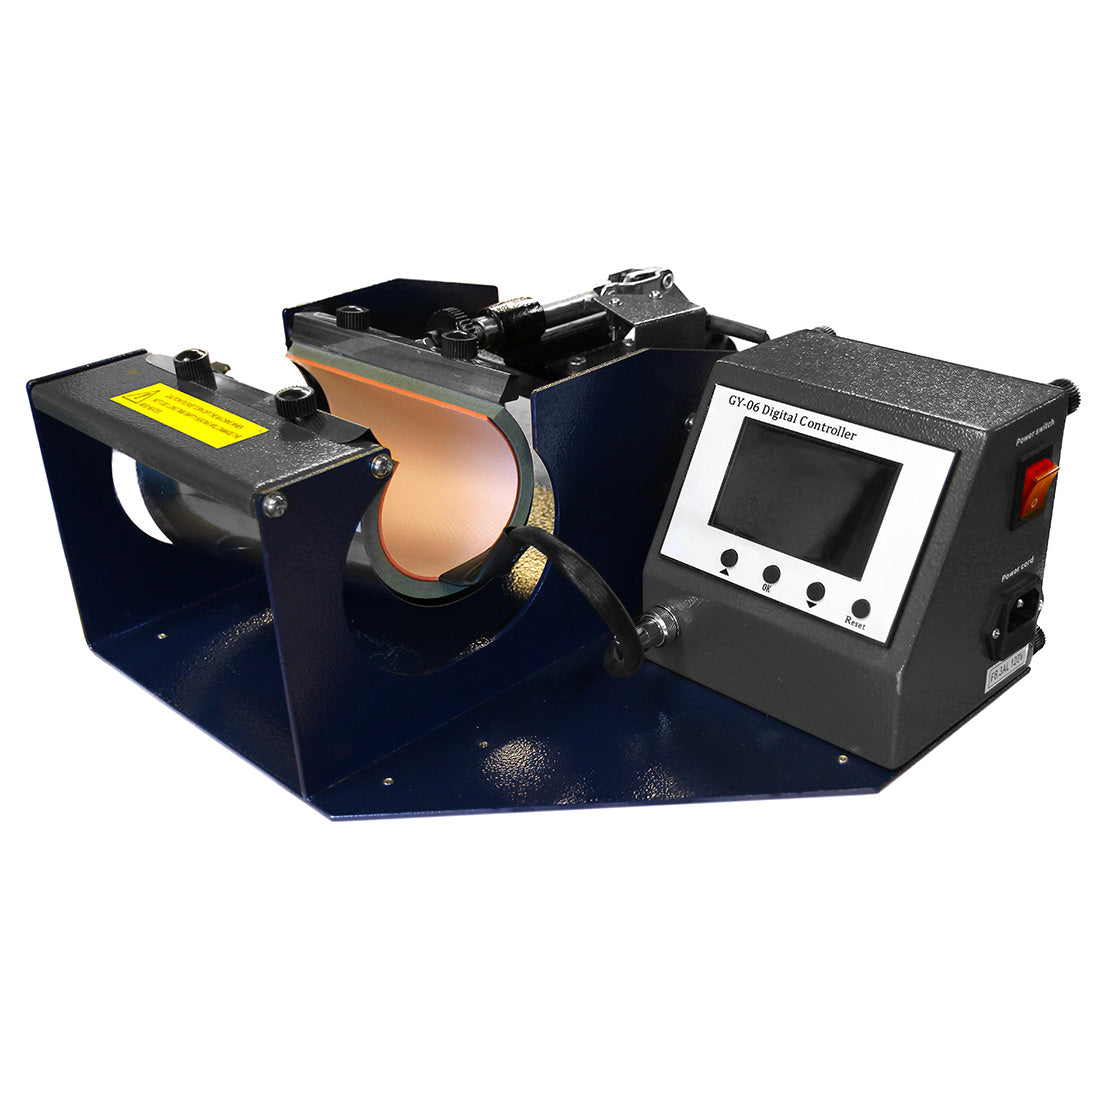 Joto Digital Mug Press - Single Station Includes 2 Elements - Joto Imaging Supplies Canada